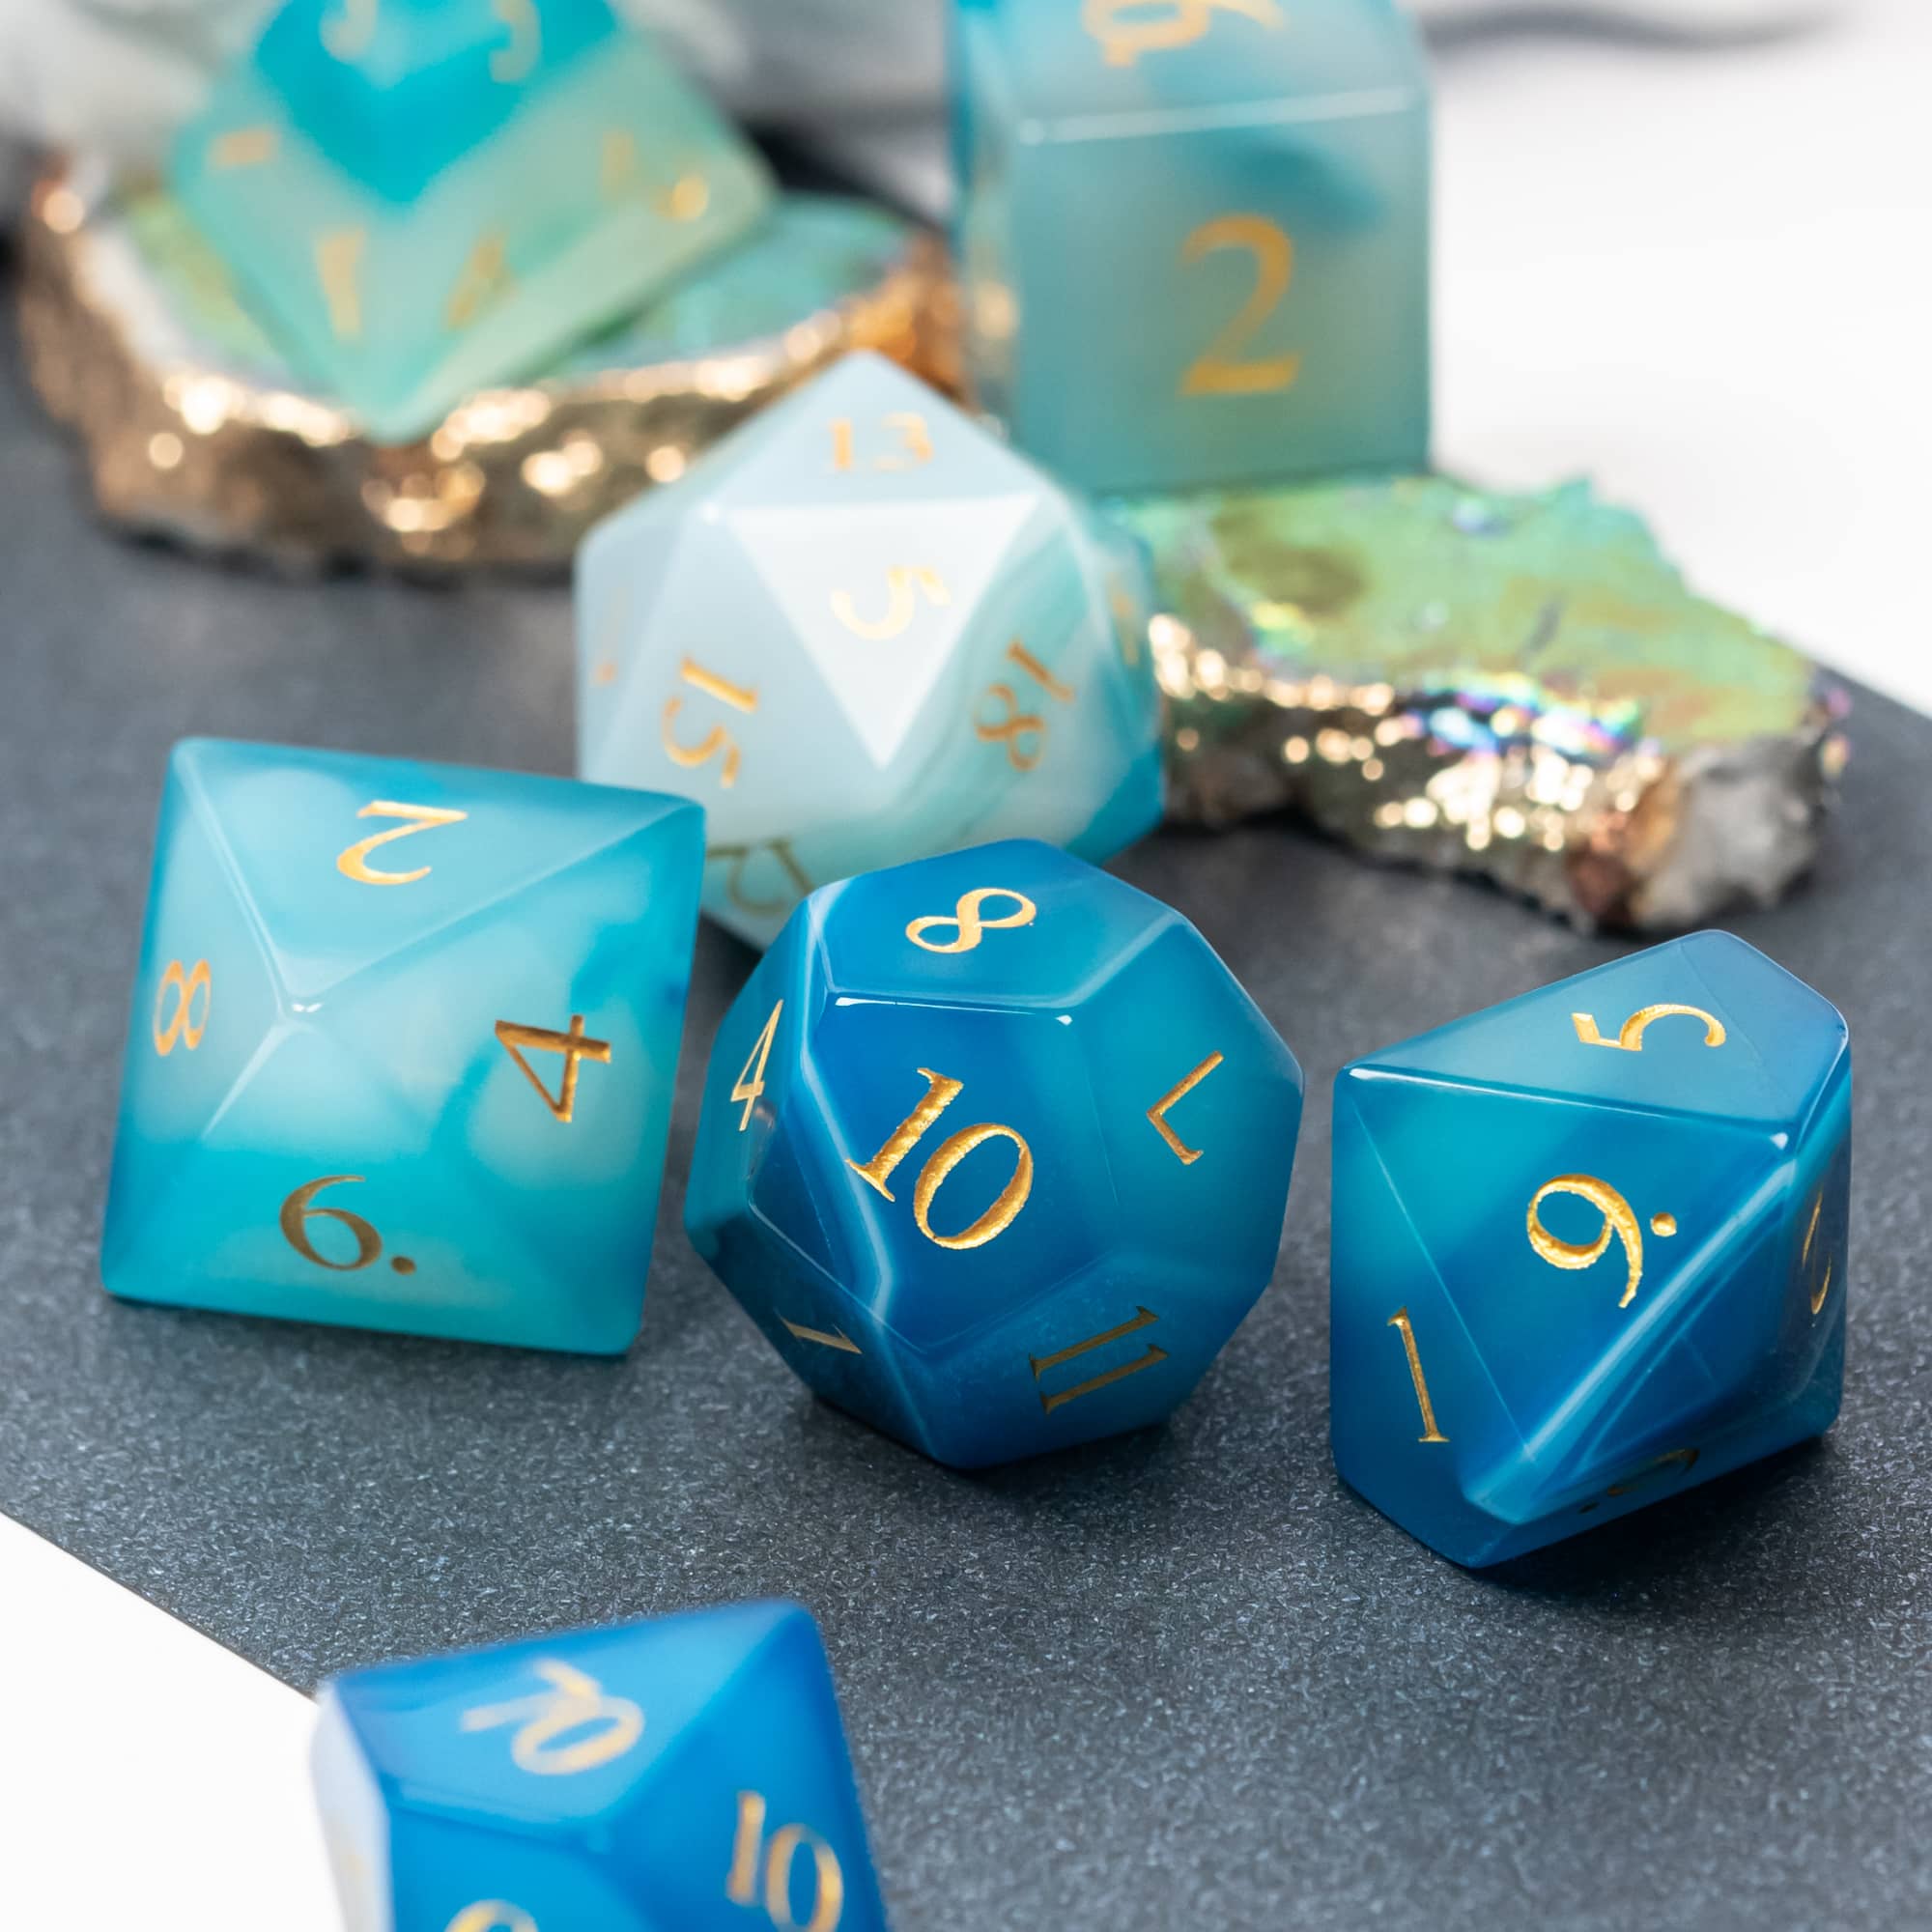 Enchanter's Gems : Agate dice set